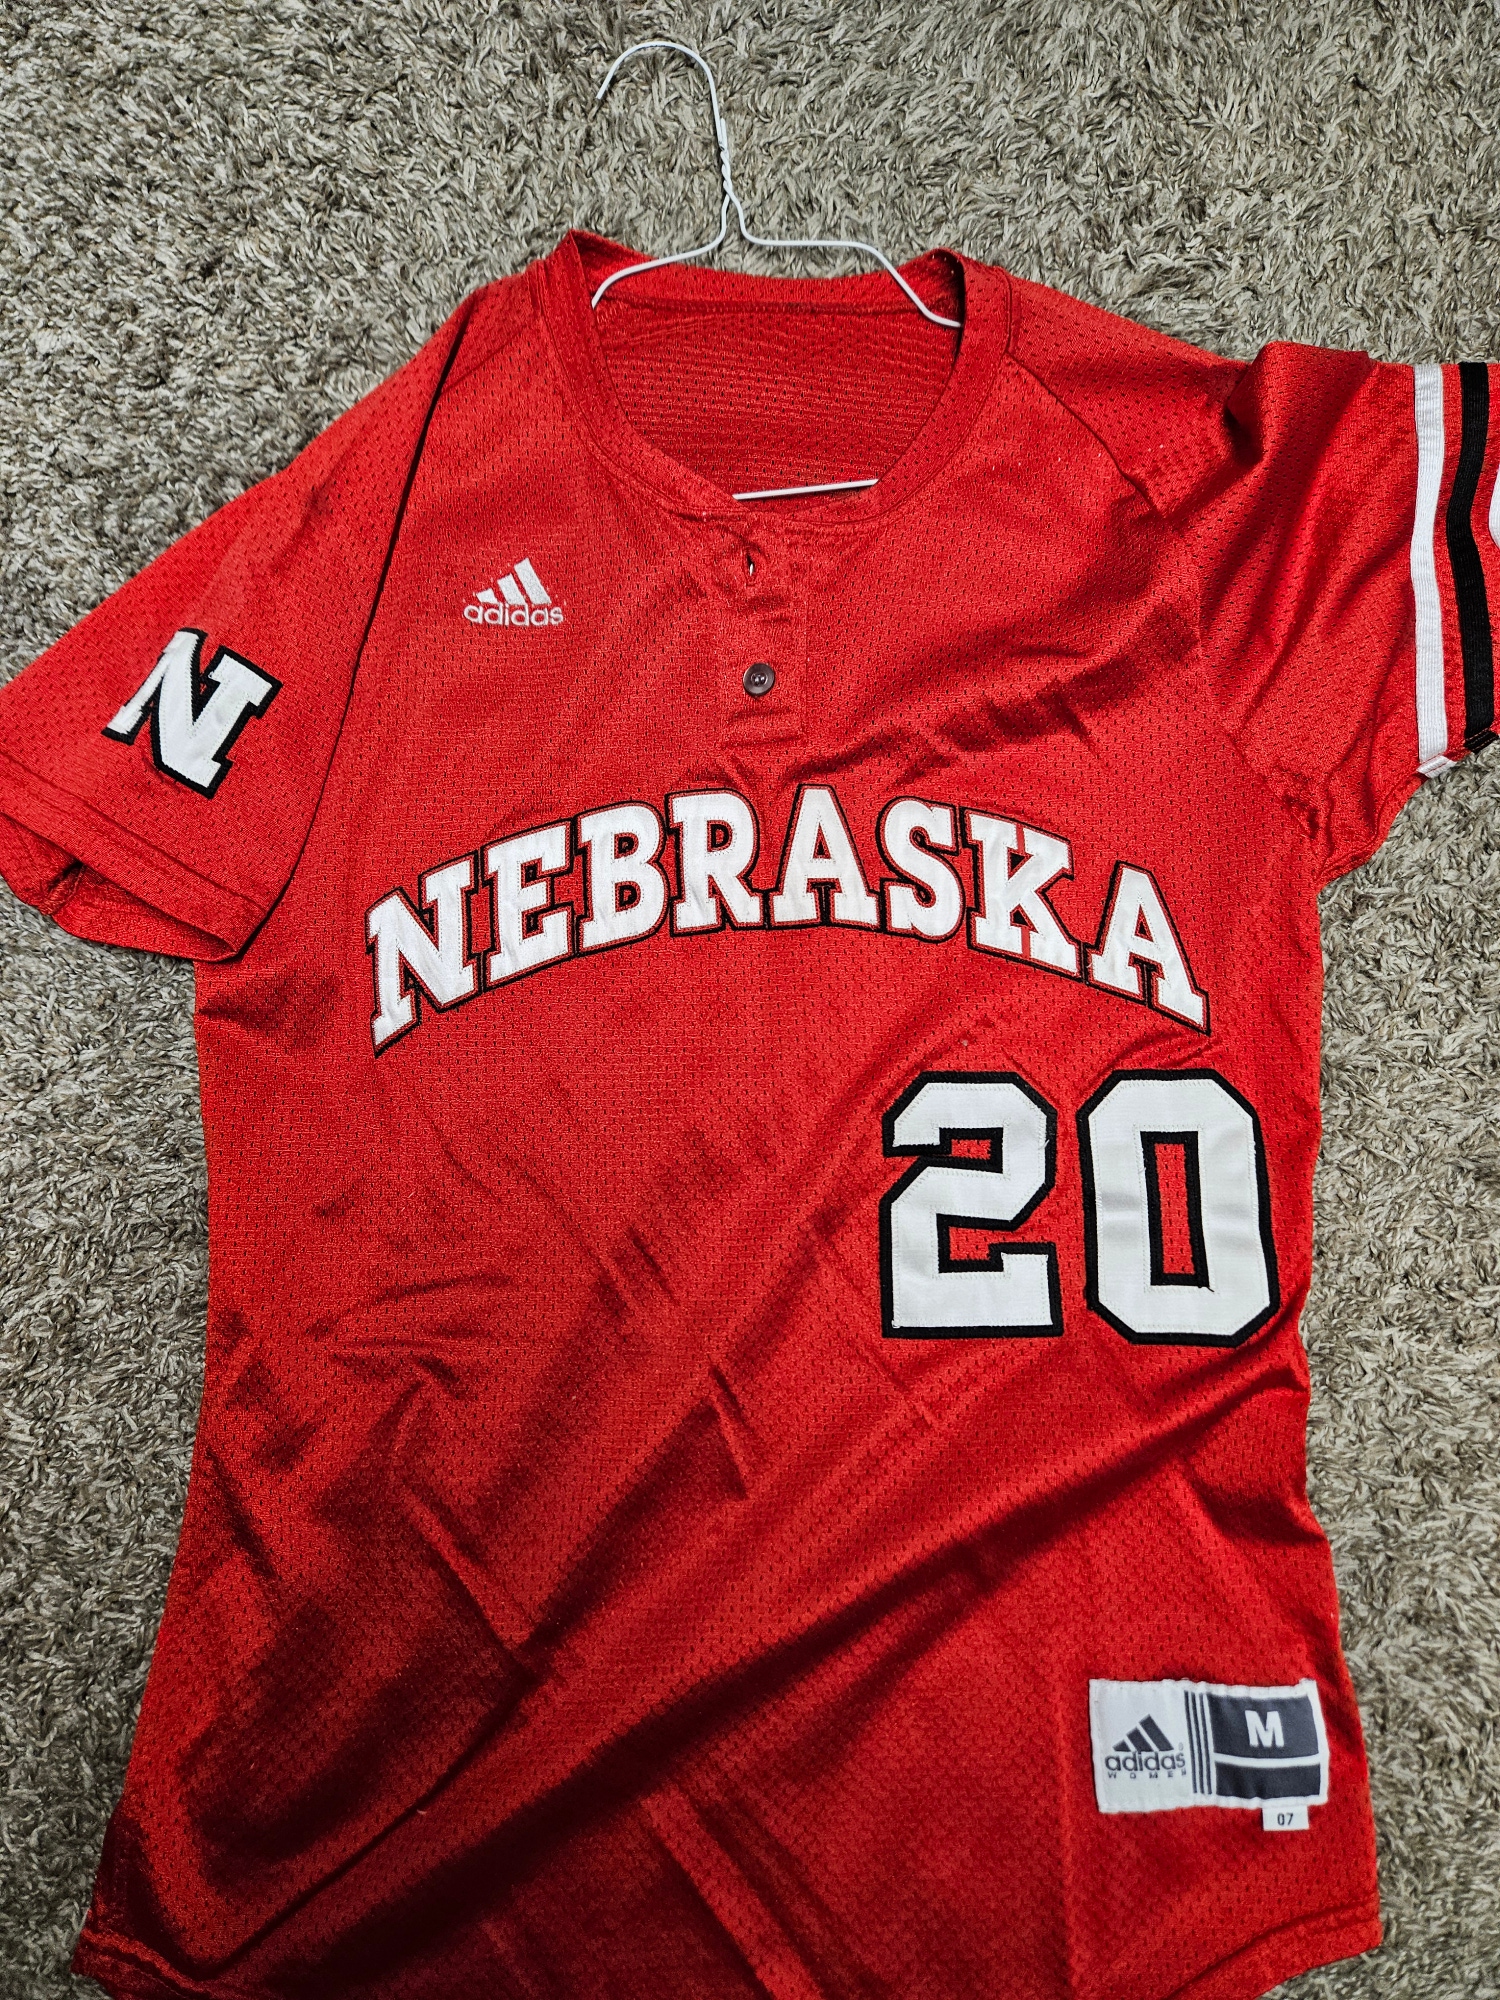 Nebraska Softball Red Jersey Women's Medium Adidas Jersey